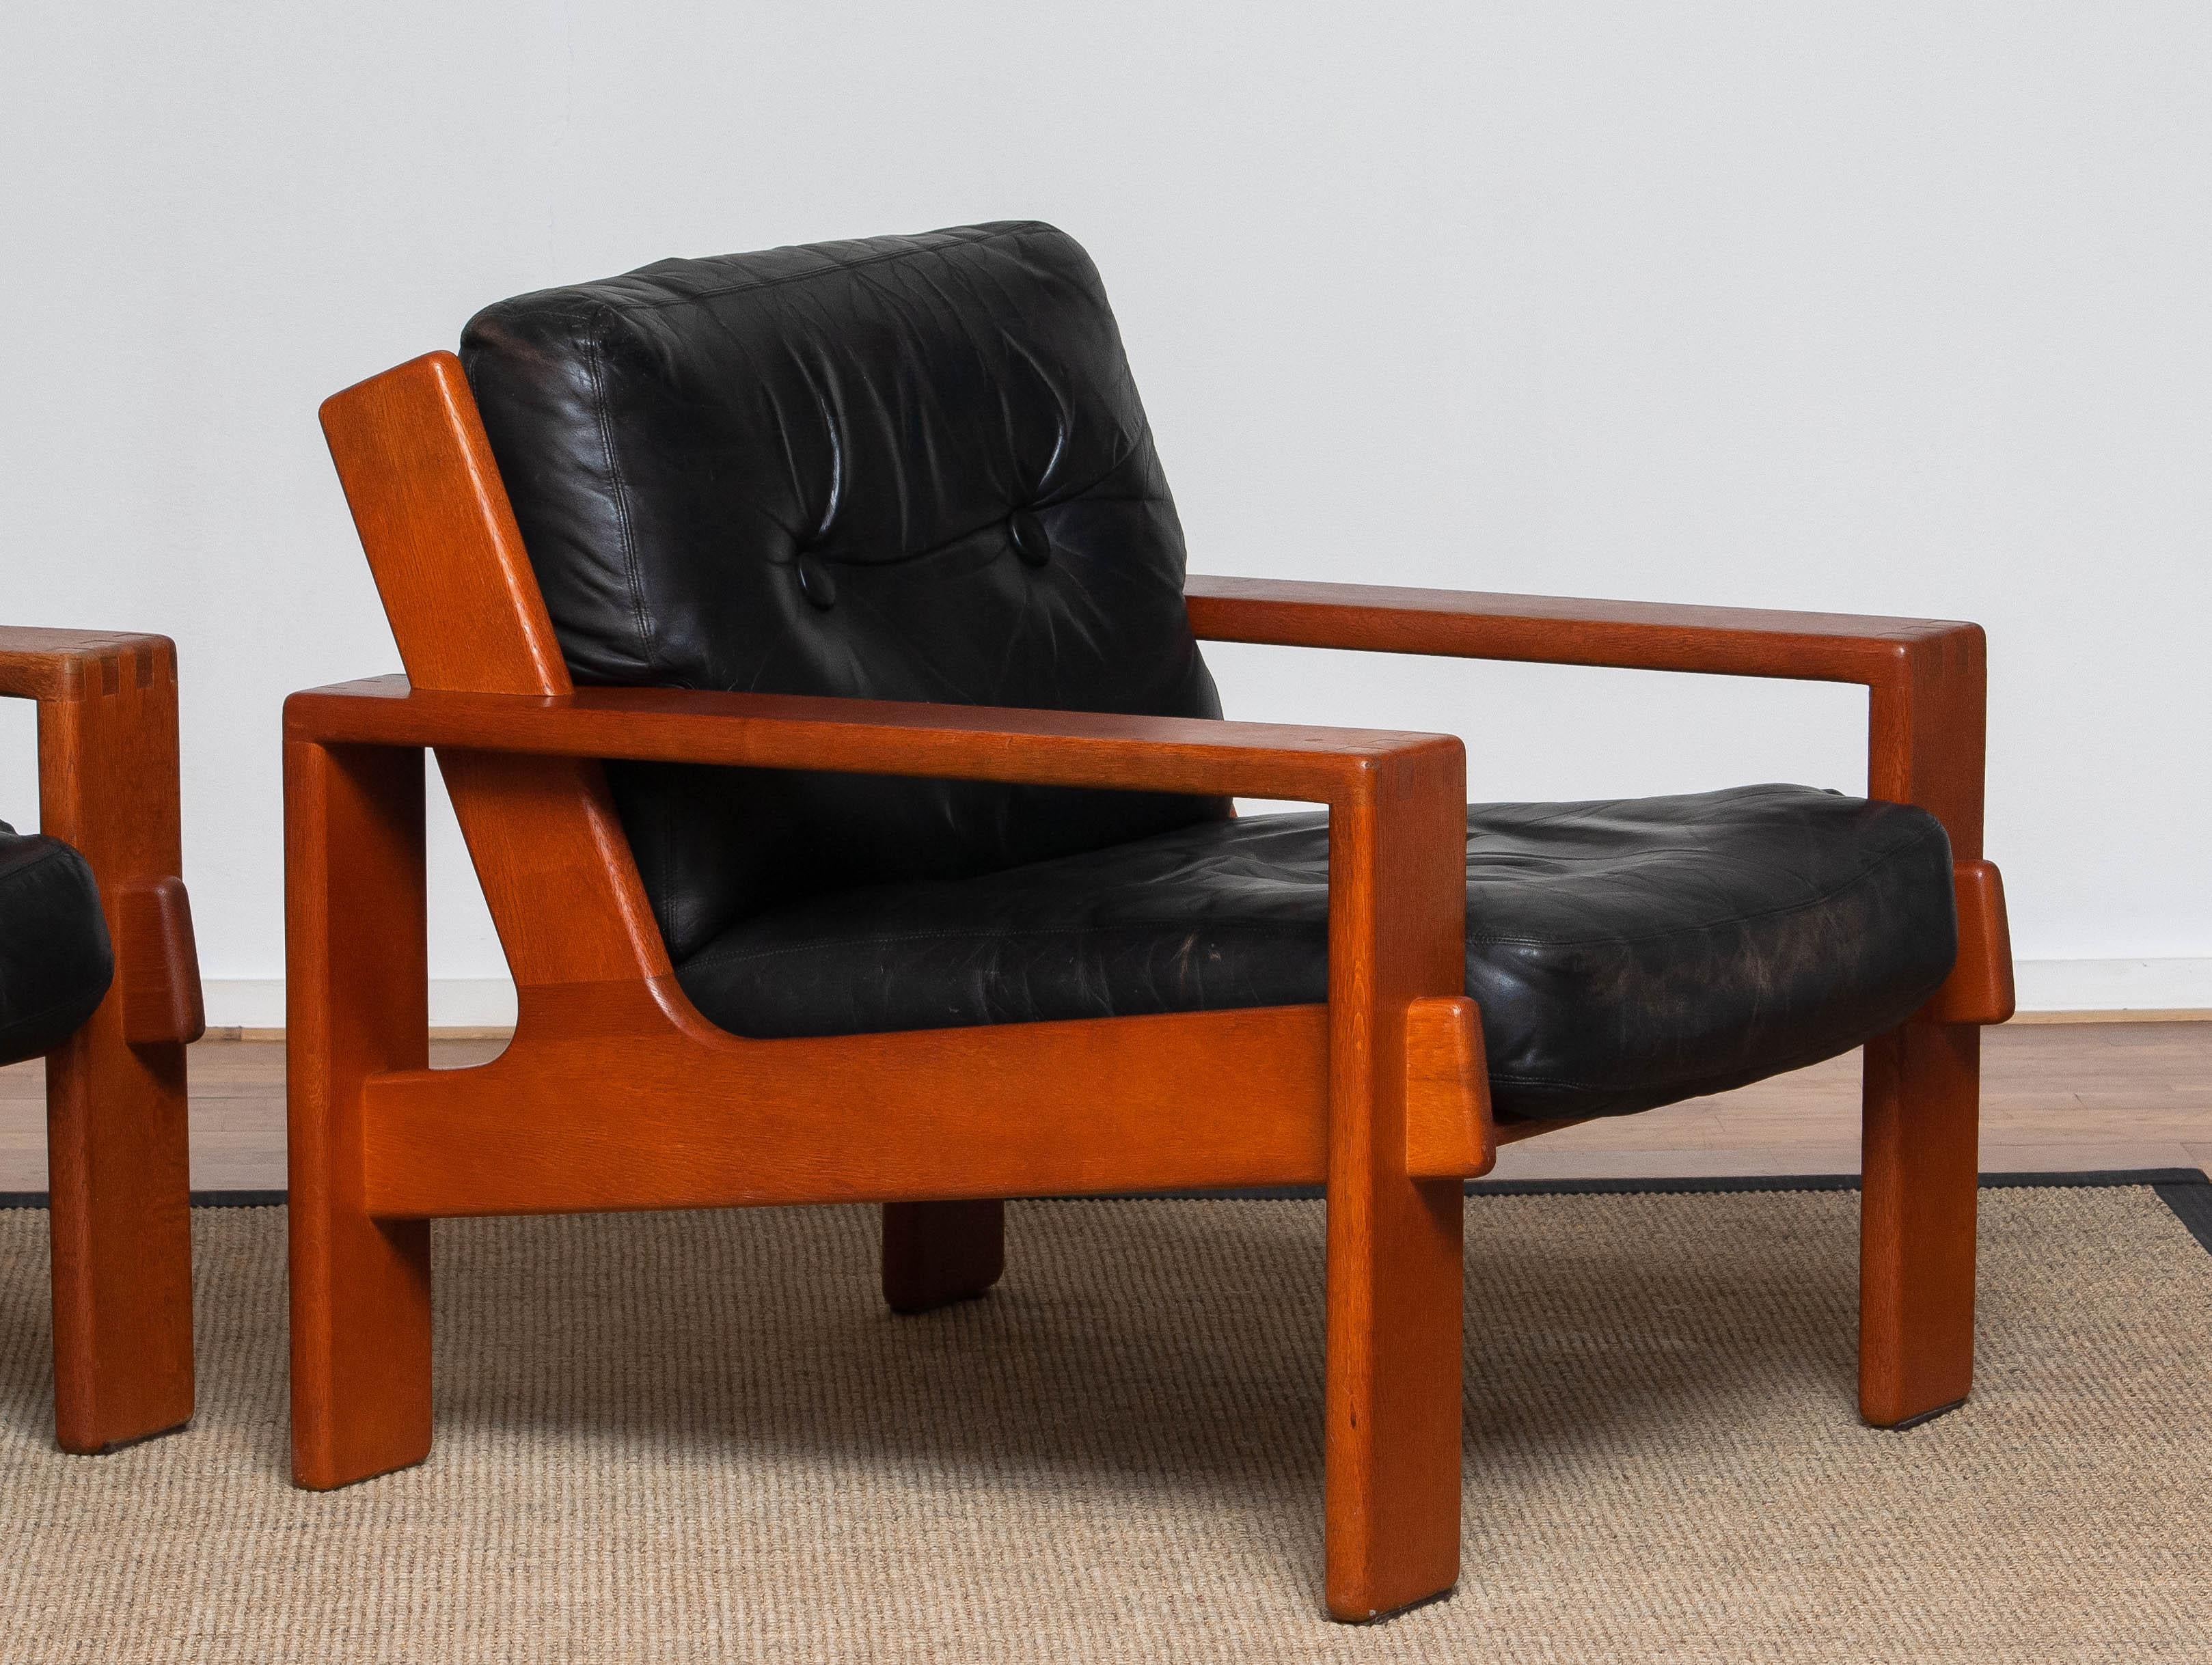 1960 Pair Teak and Black Leather Cubist Lounge Chair by Esko Pajamies for Asko 3